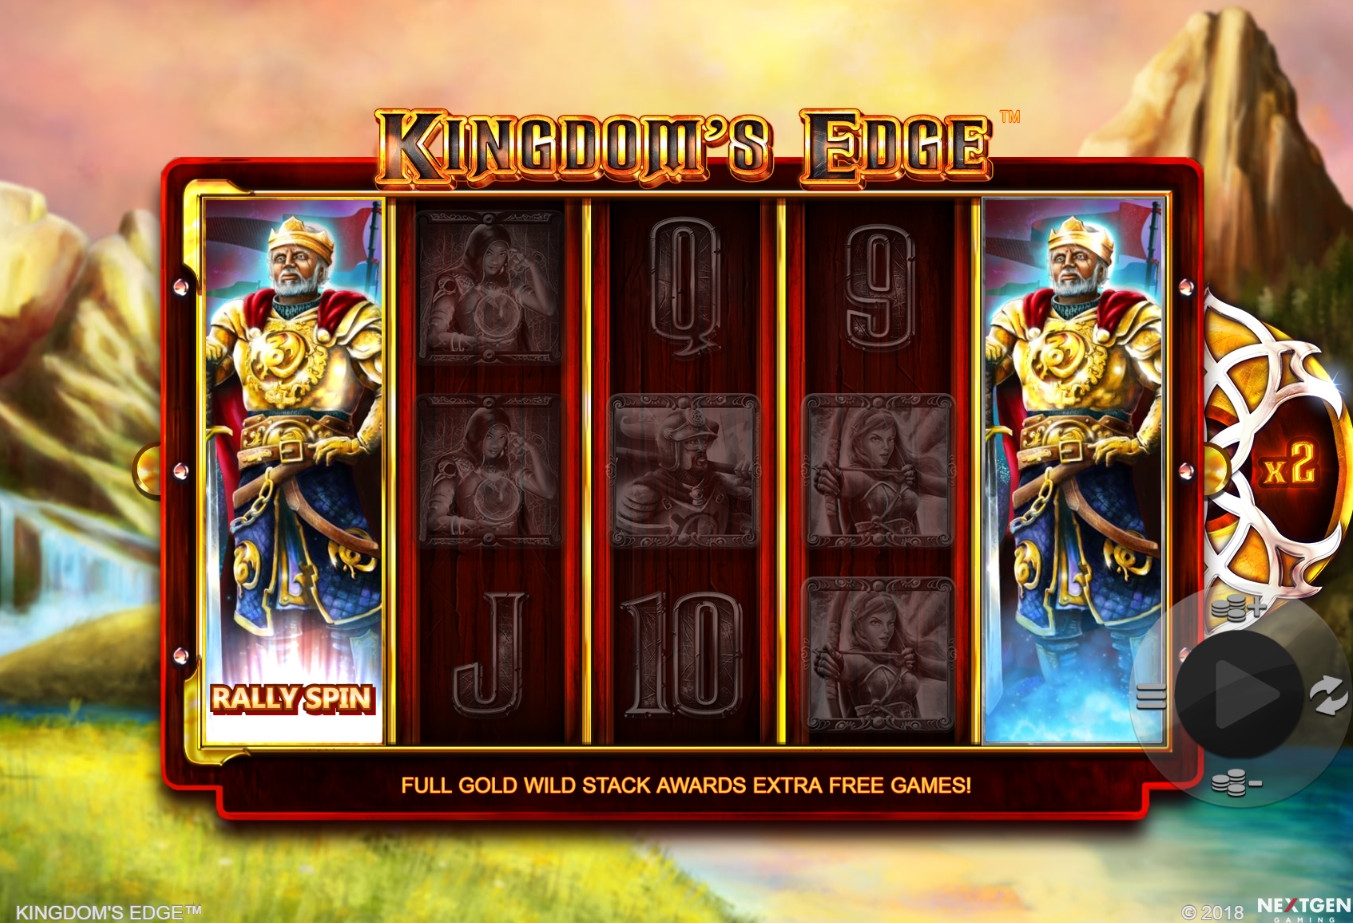 Kingdom’s Edge (Kingdom’s Edge) from category Slots